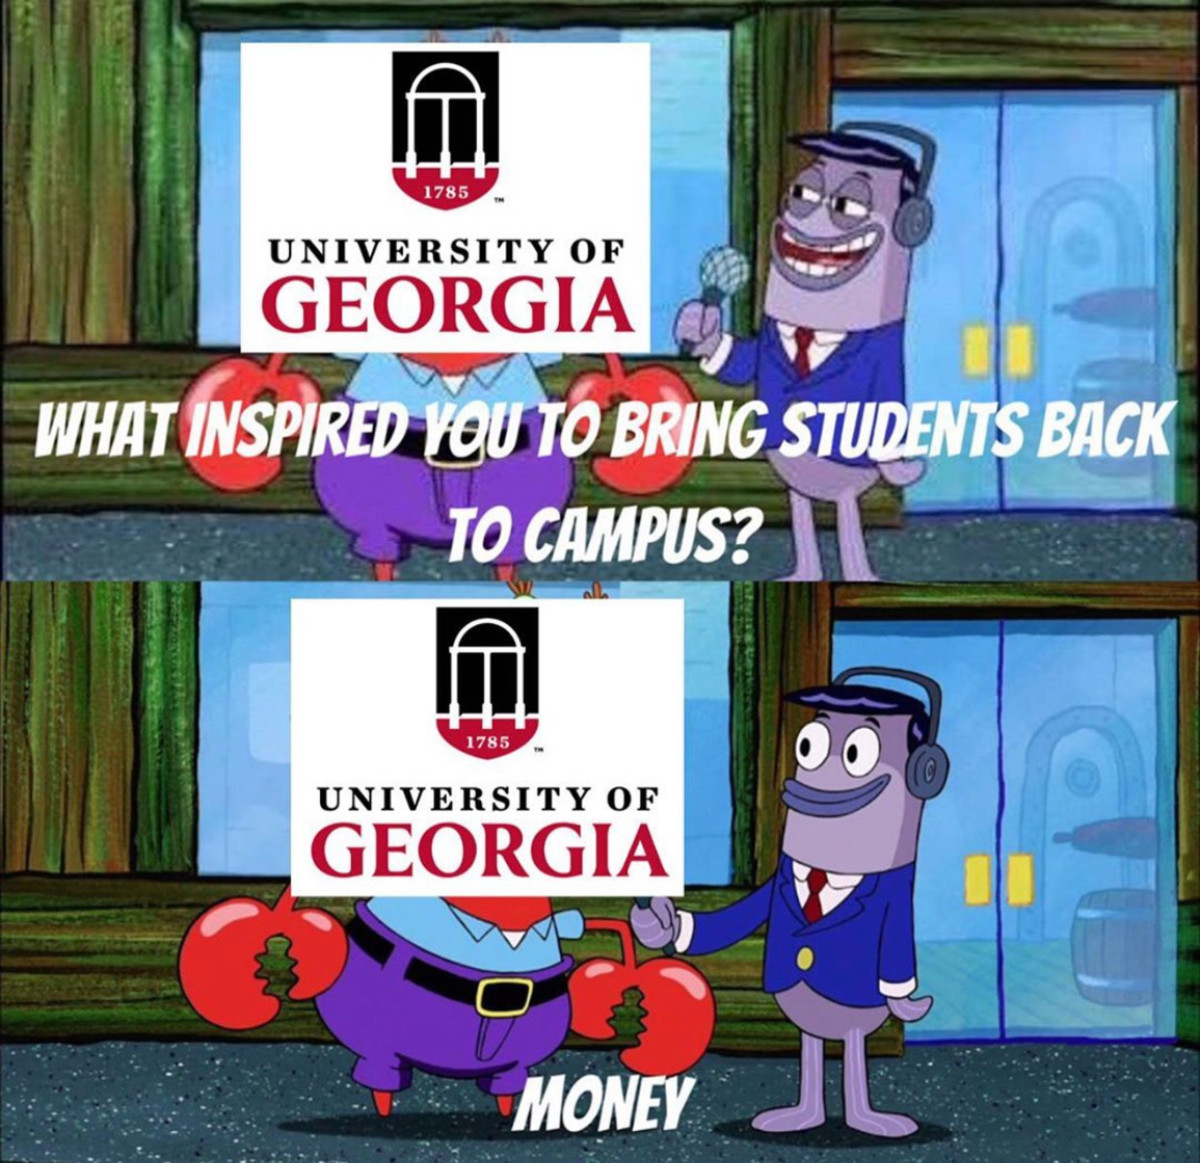 This Meme is circulating throughout students at UGA. 